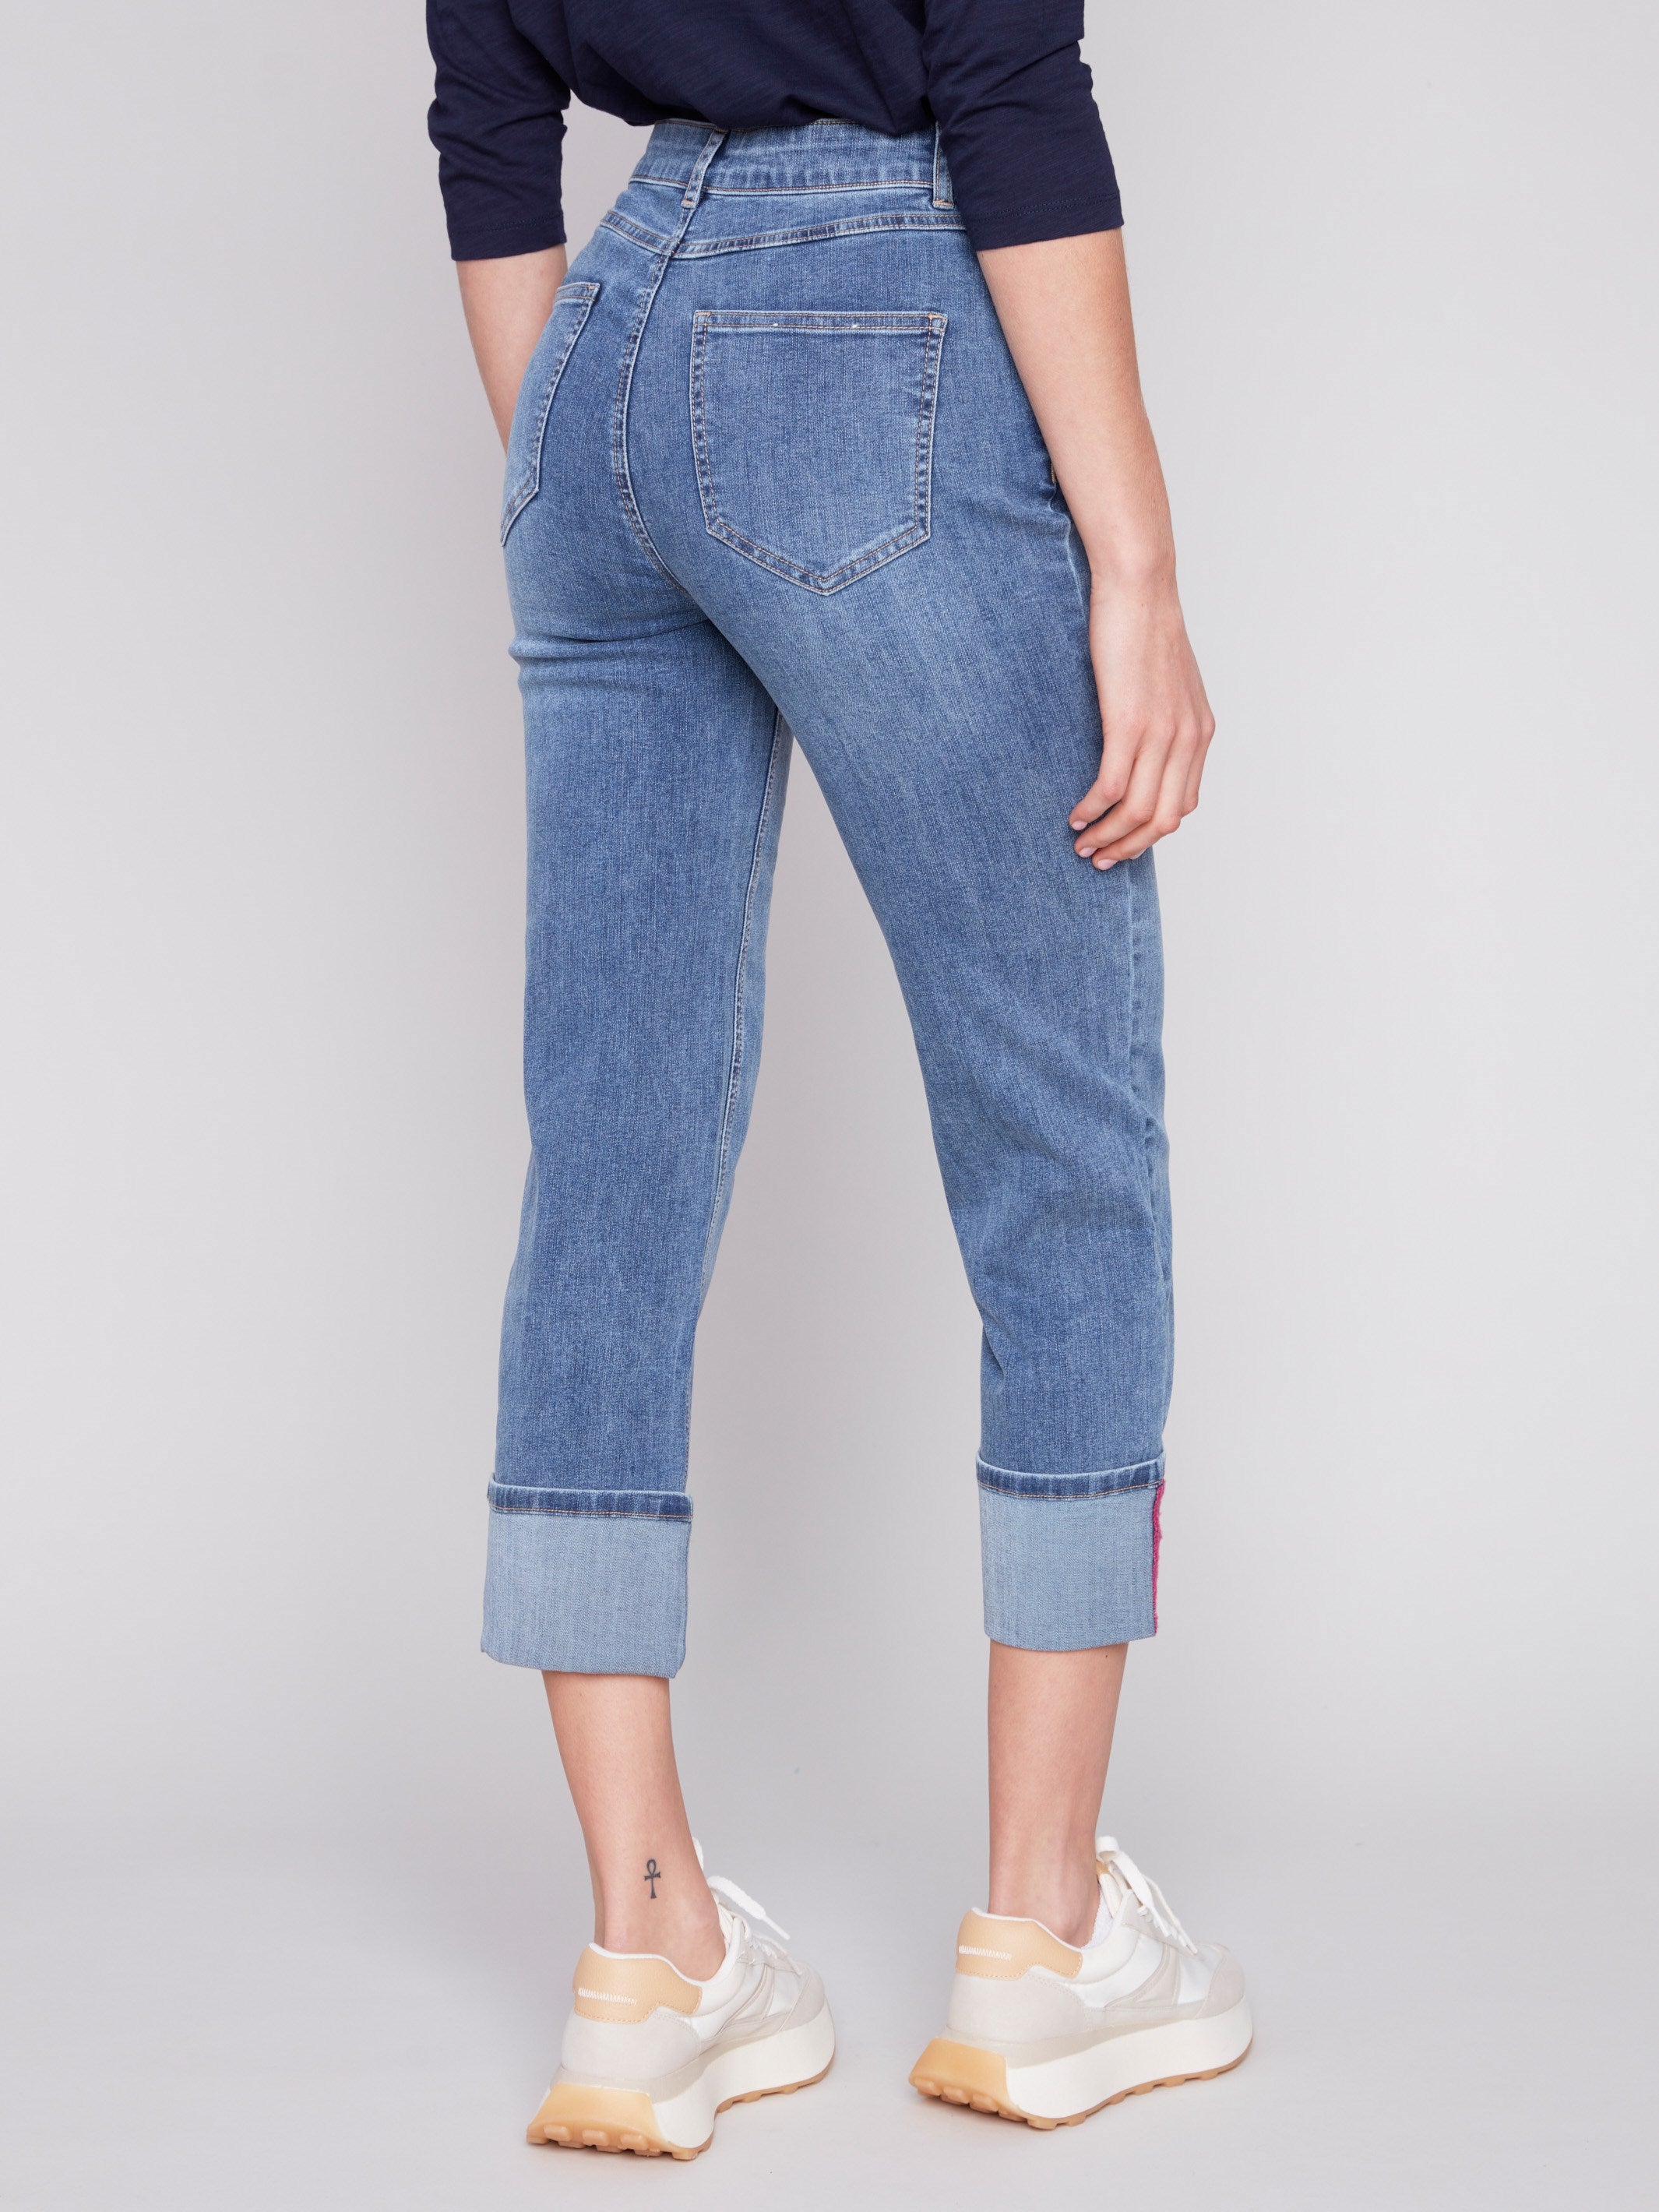 Charlie B Straight Leg Jeans with Folded Cuff - Medium Blue - Image 3